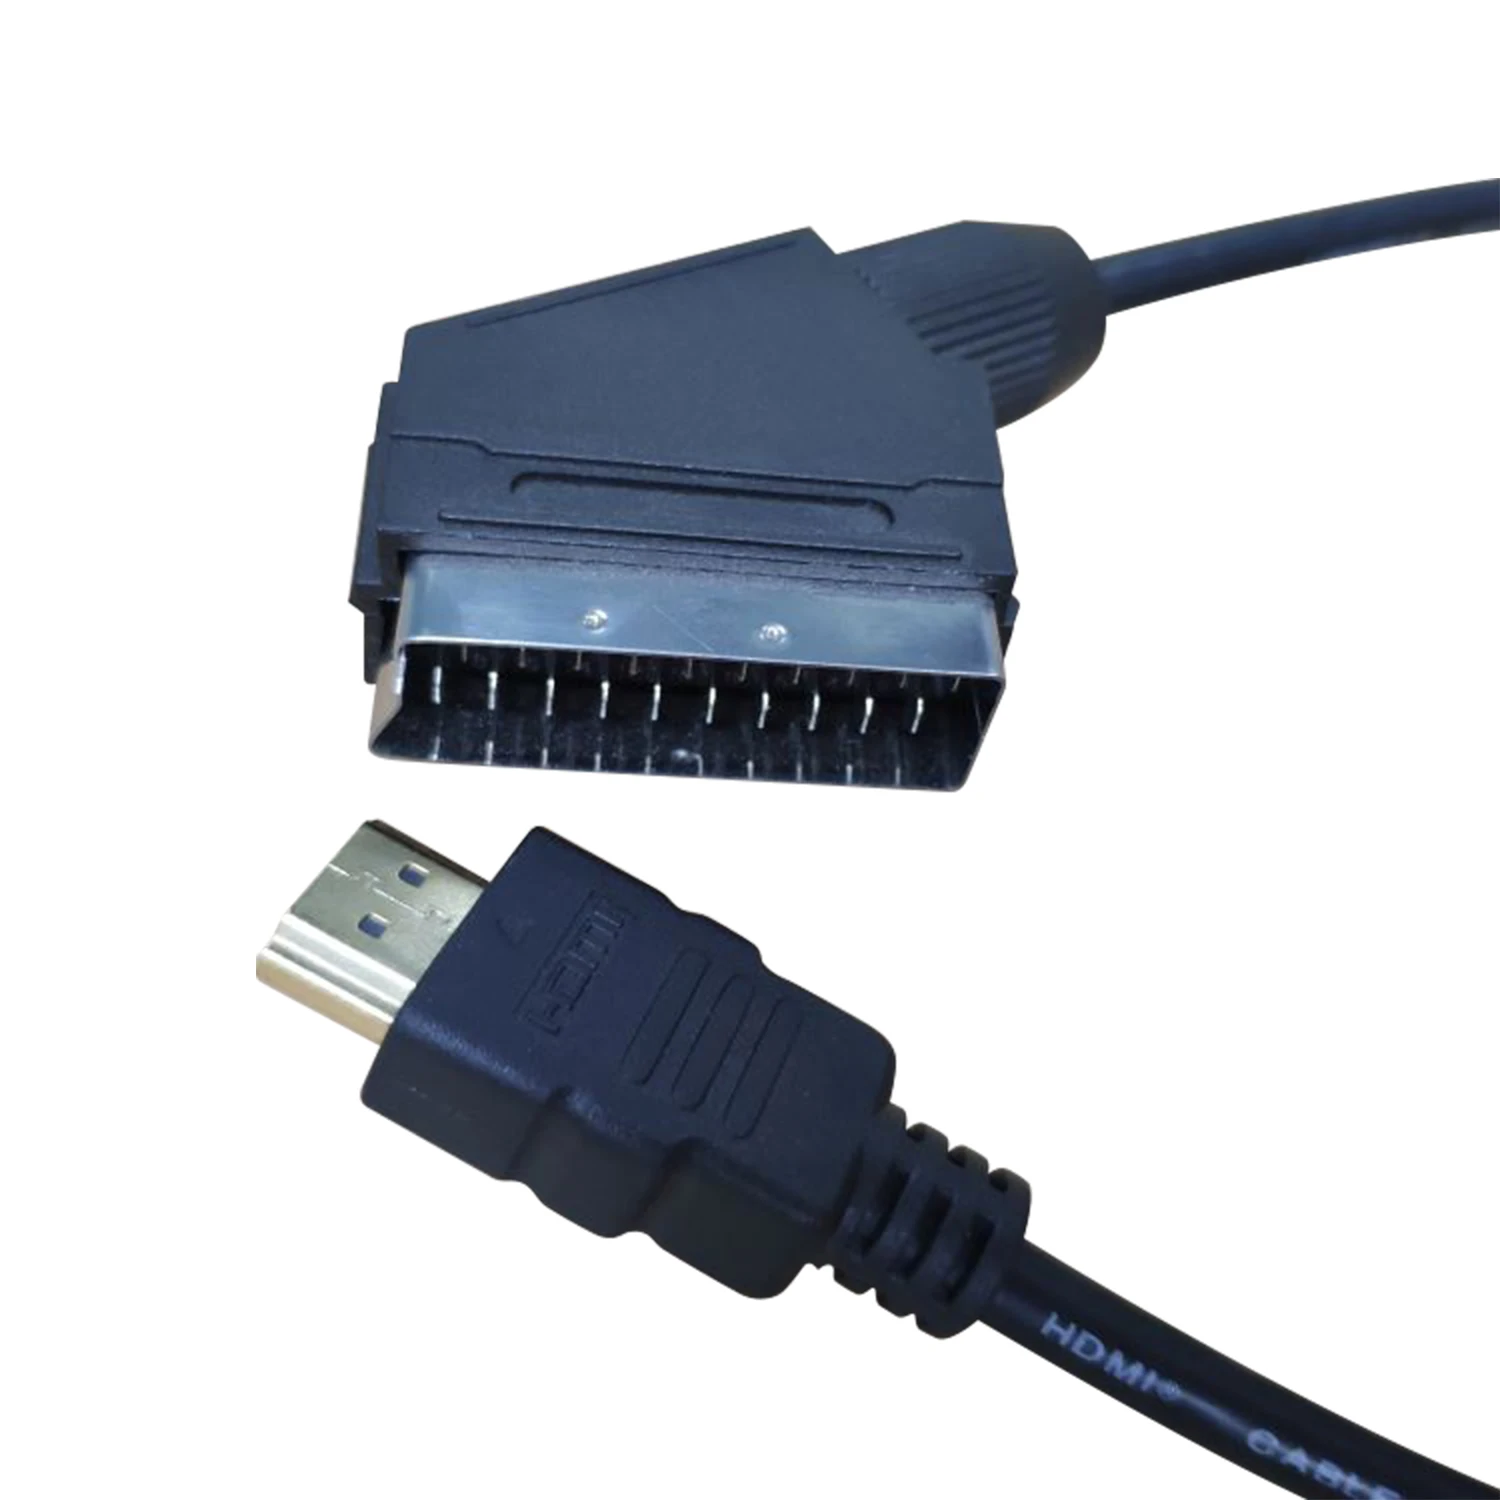 Скарт переходник для телевизора. SCART HDMI кабель. Кабель SCART скарт на HDMI. Скарт разъем переходник на HDMI. Провод скарт на HDMI.